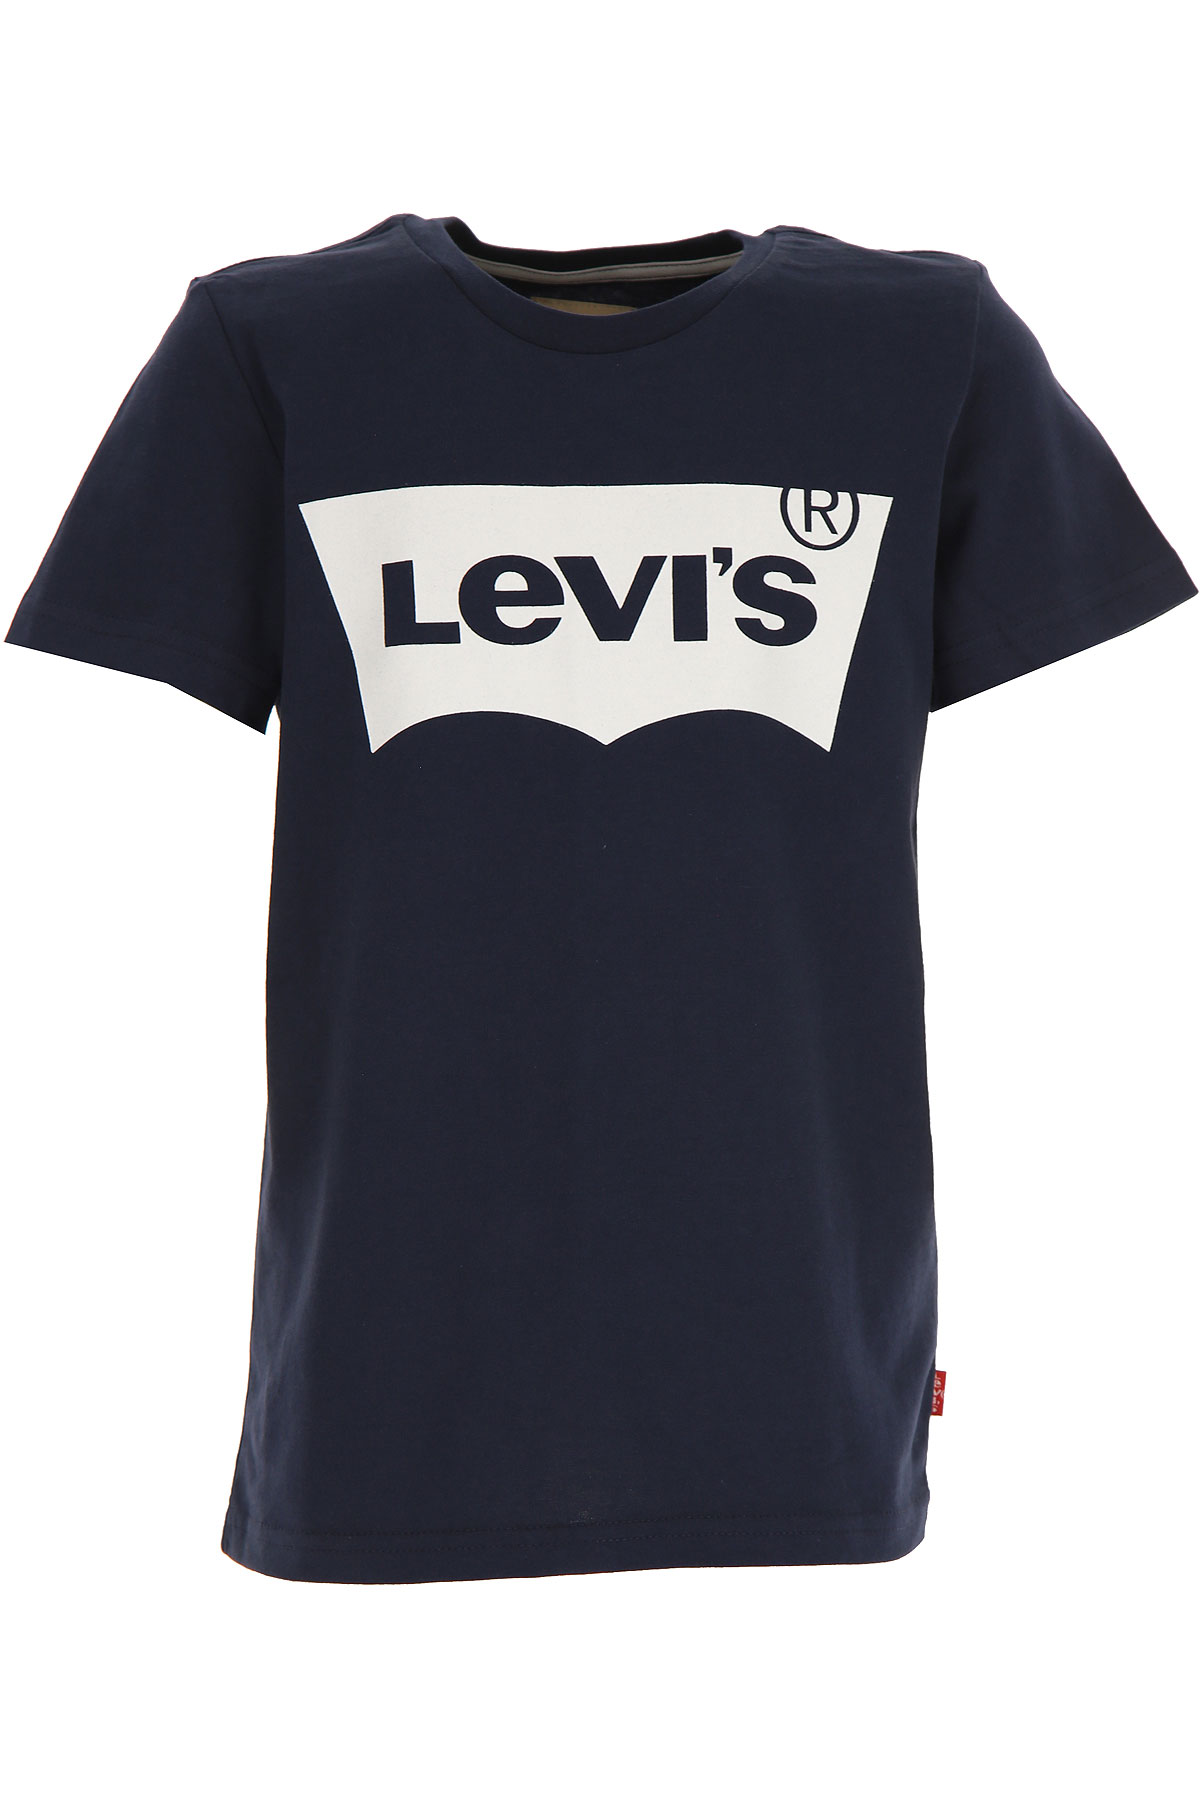 Levis Kinder T-Shirt für Jungen Günstig im Sale, Blau, Baumwolle, 2017, 16Y 3Y 5Y 6Y 8Y